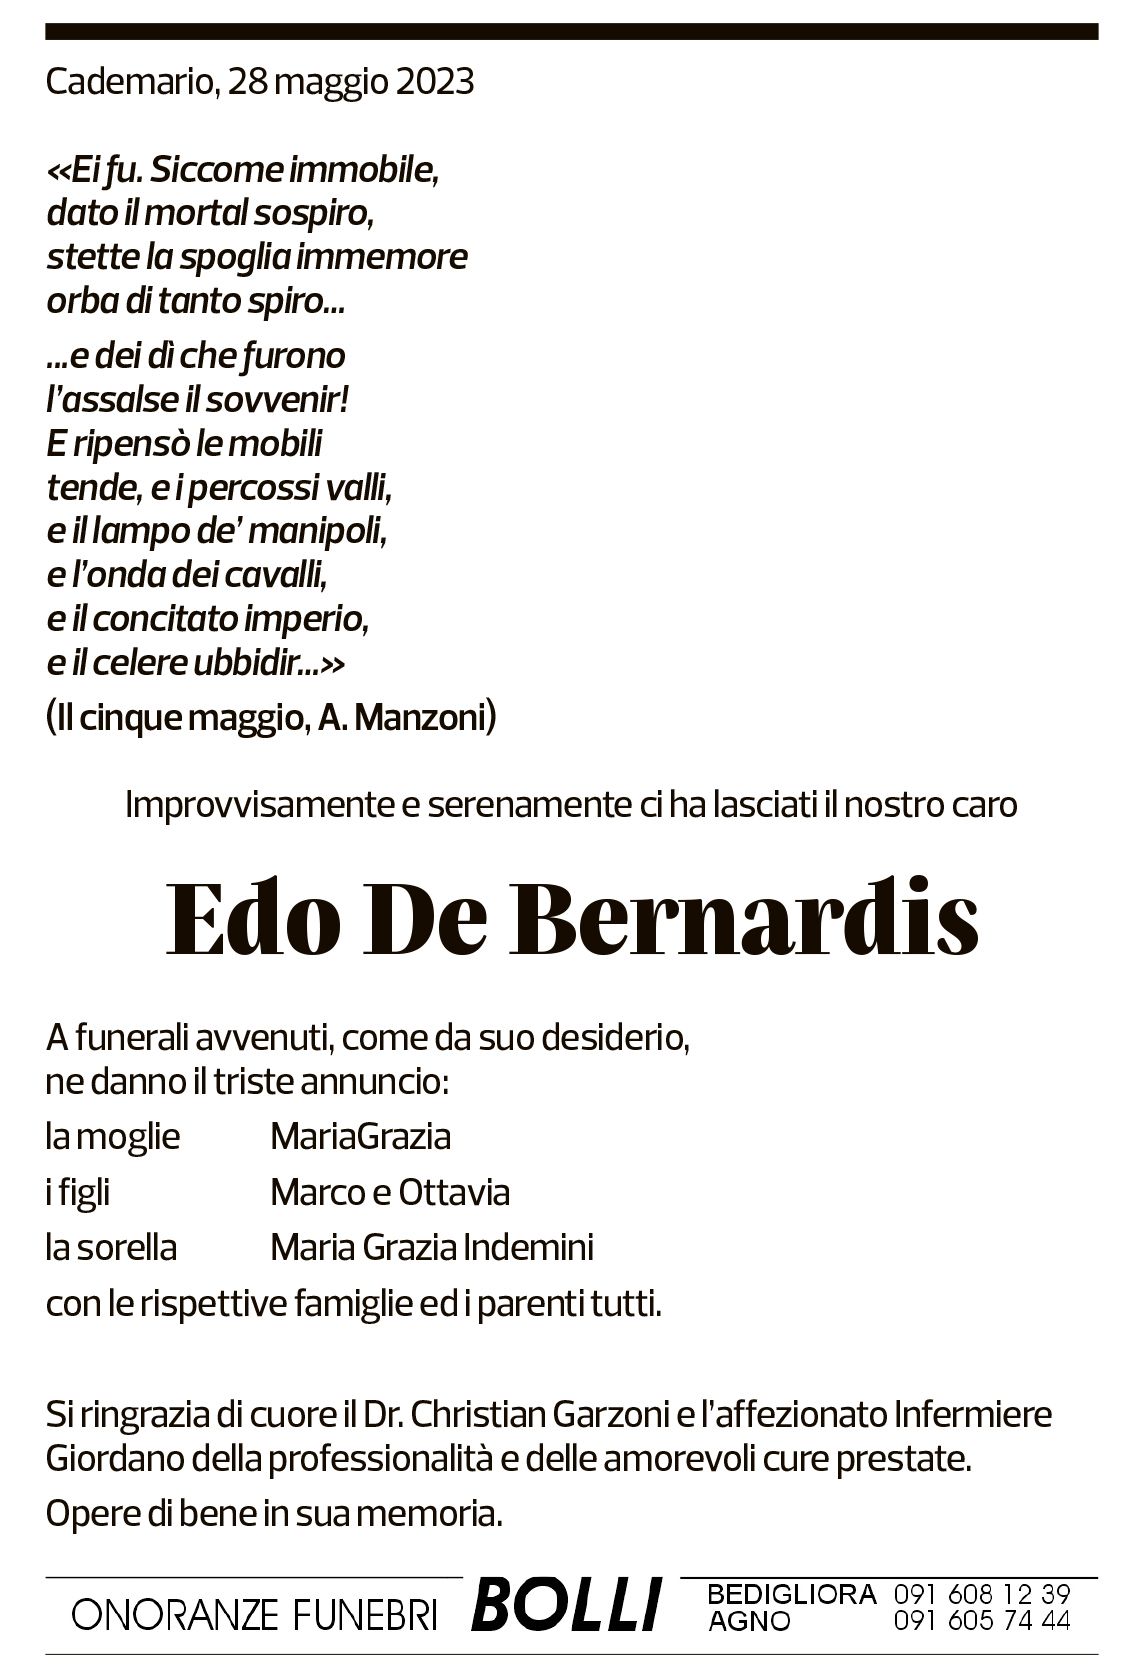 Annuncio funebre Edo De Bernardis